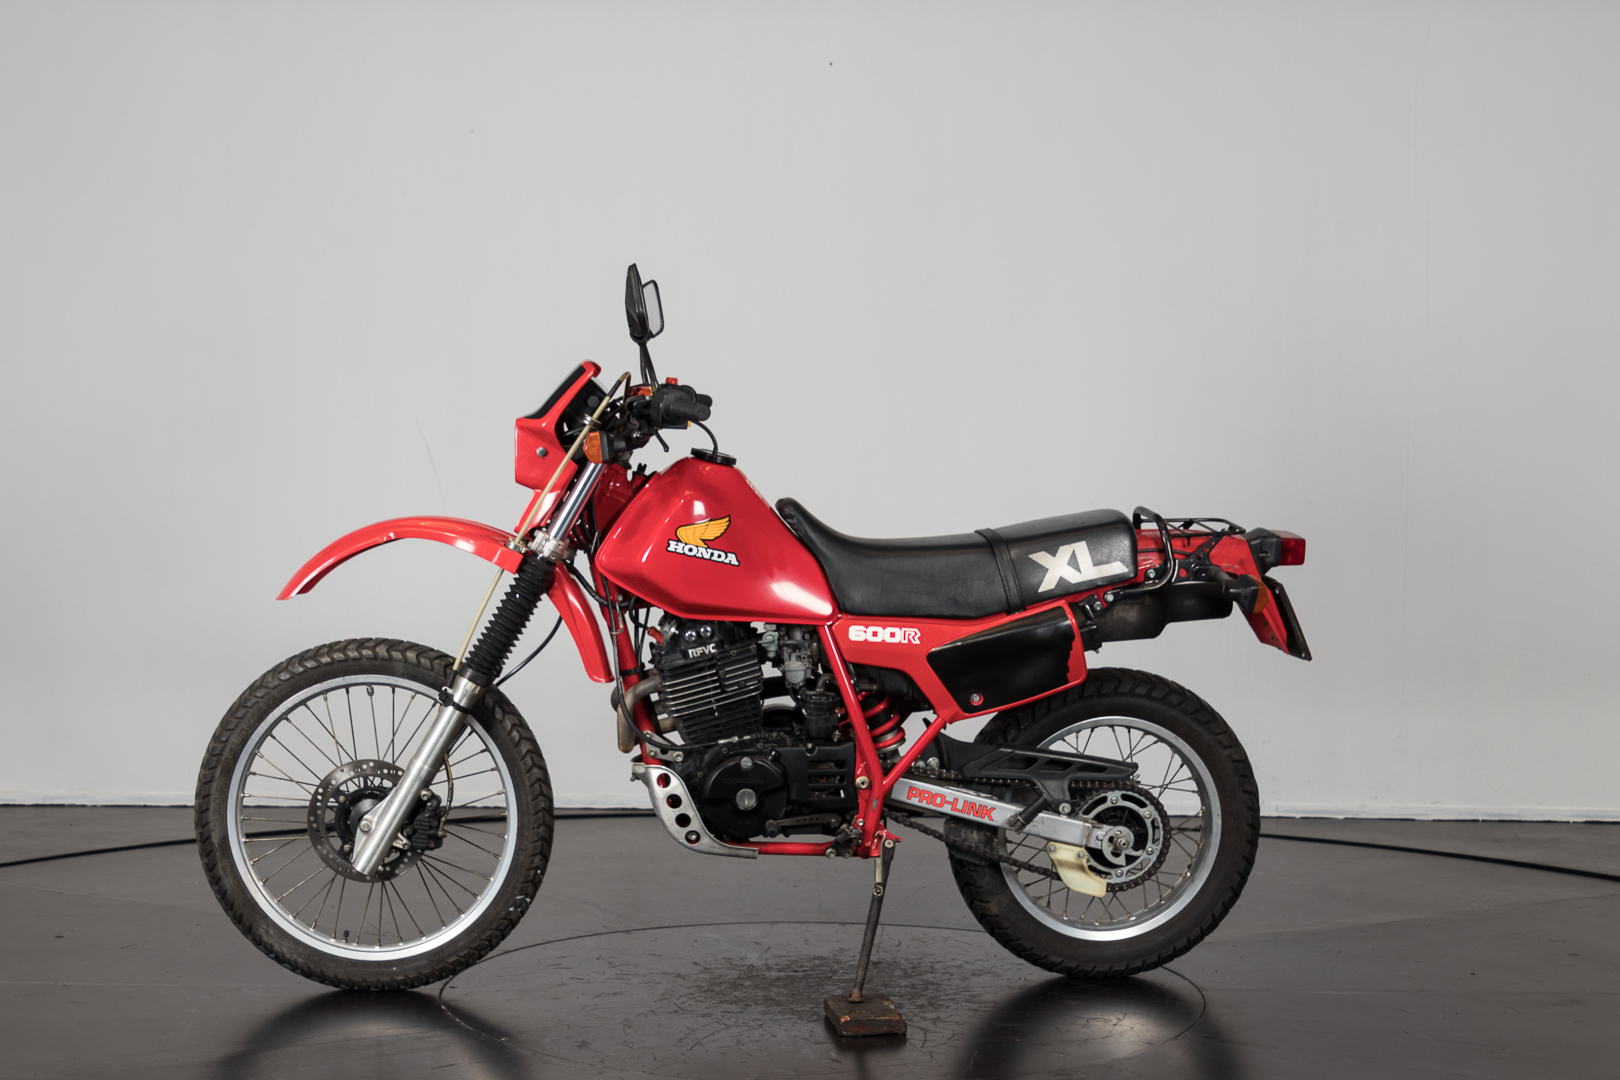 1983 Honda XL 600 R Honda Moto d'epoca Ruote da Sogno